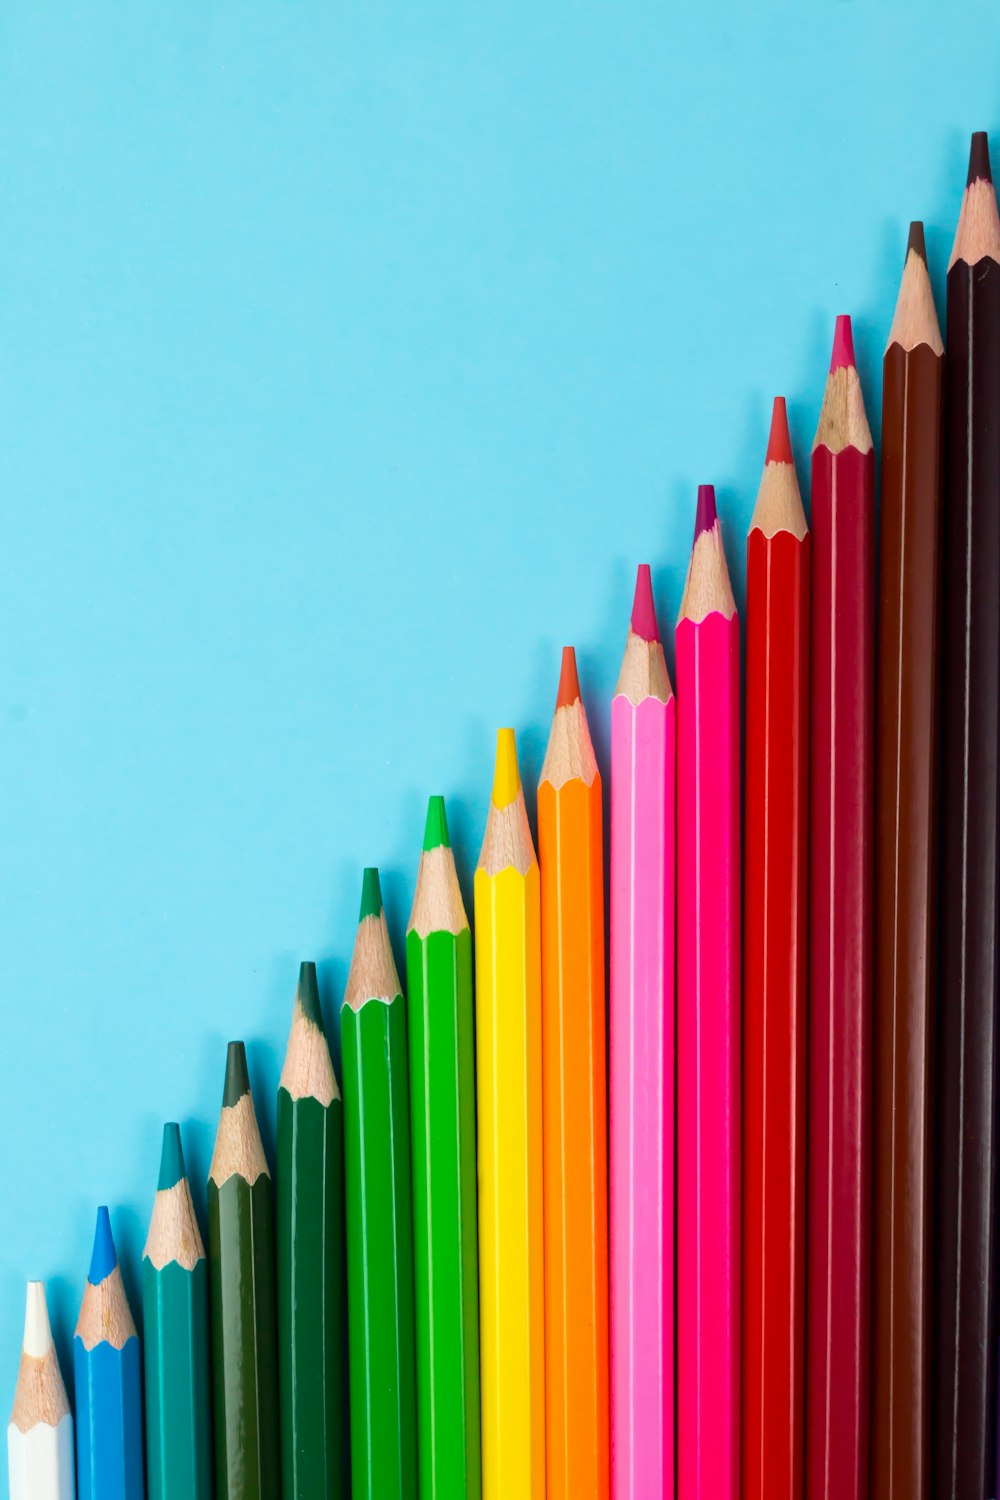 999+ Color Pencil Pictures | Download Free Images on Unsplash